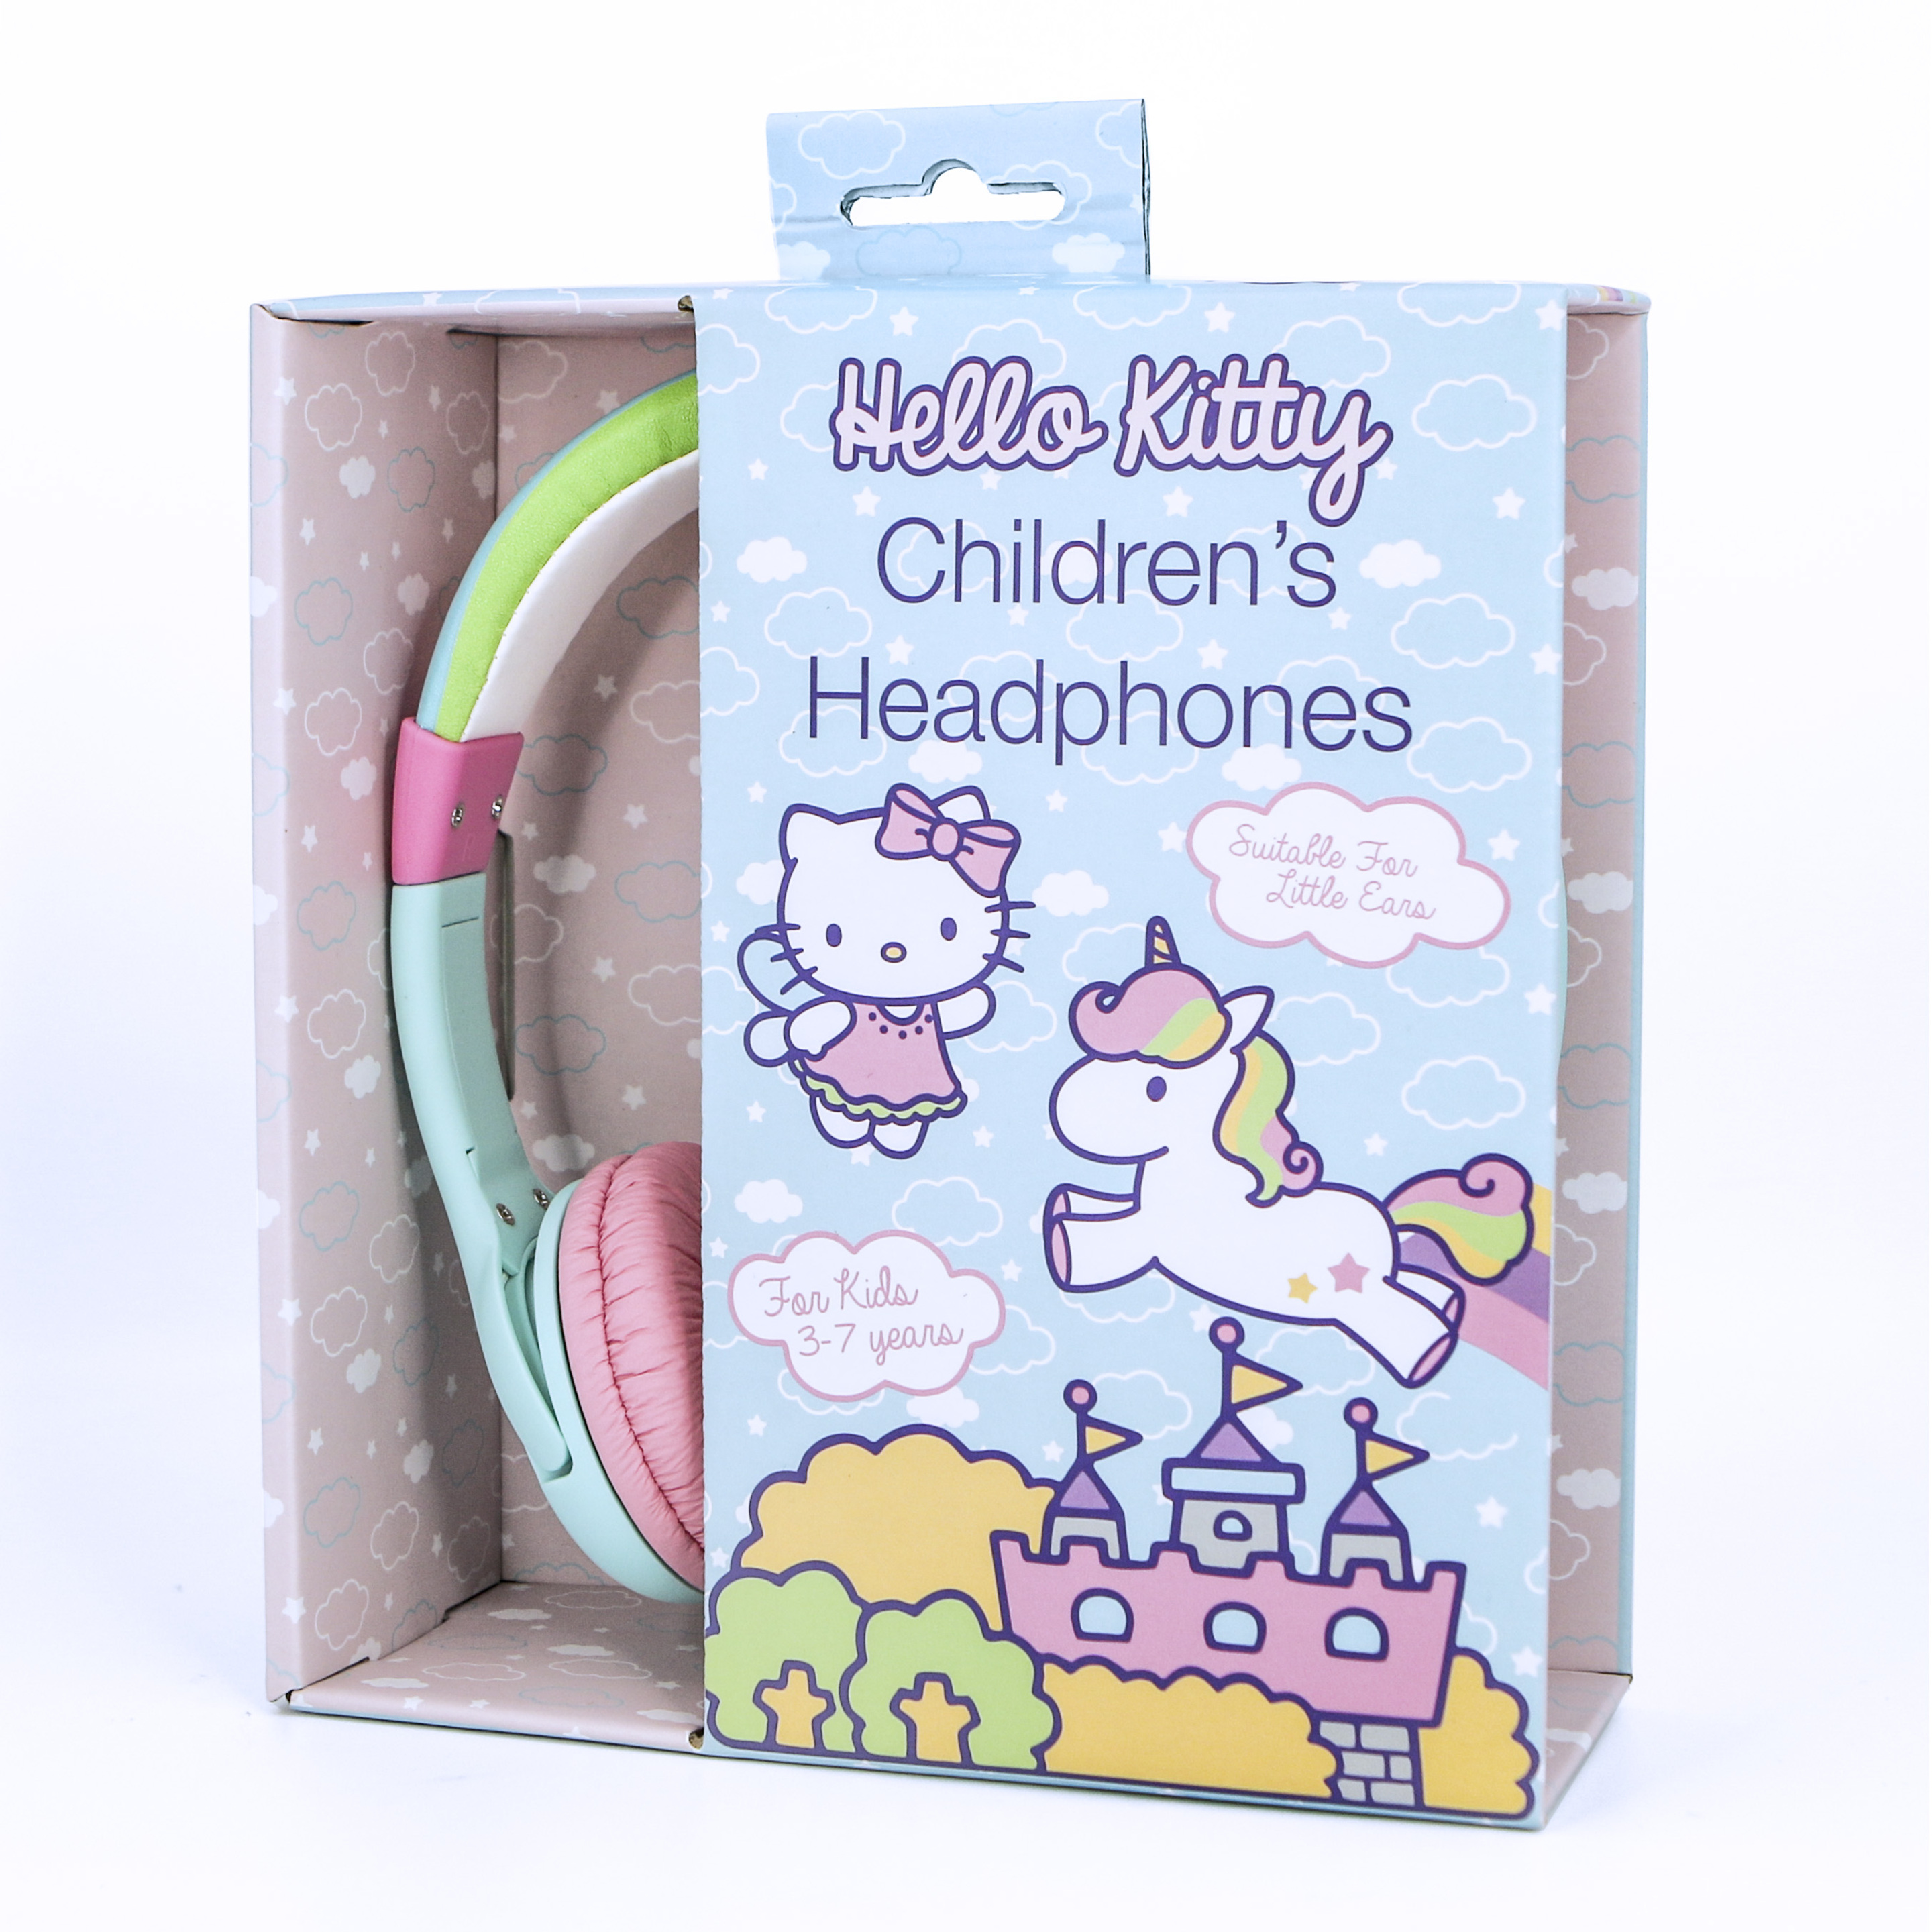 Otl Auriculares Infantiles Hello Kitty Unicorn - Nuevos Auriculares Otl.  MKP